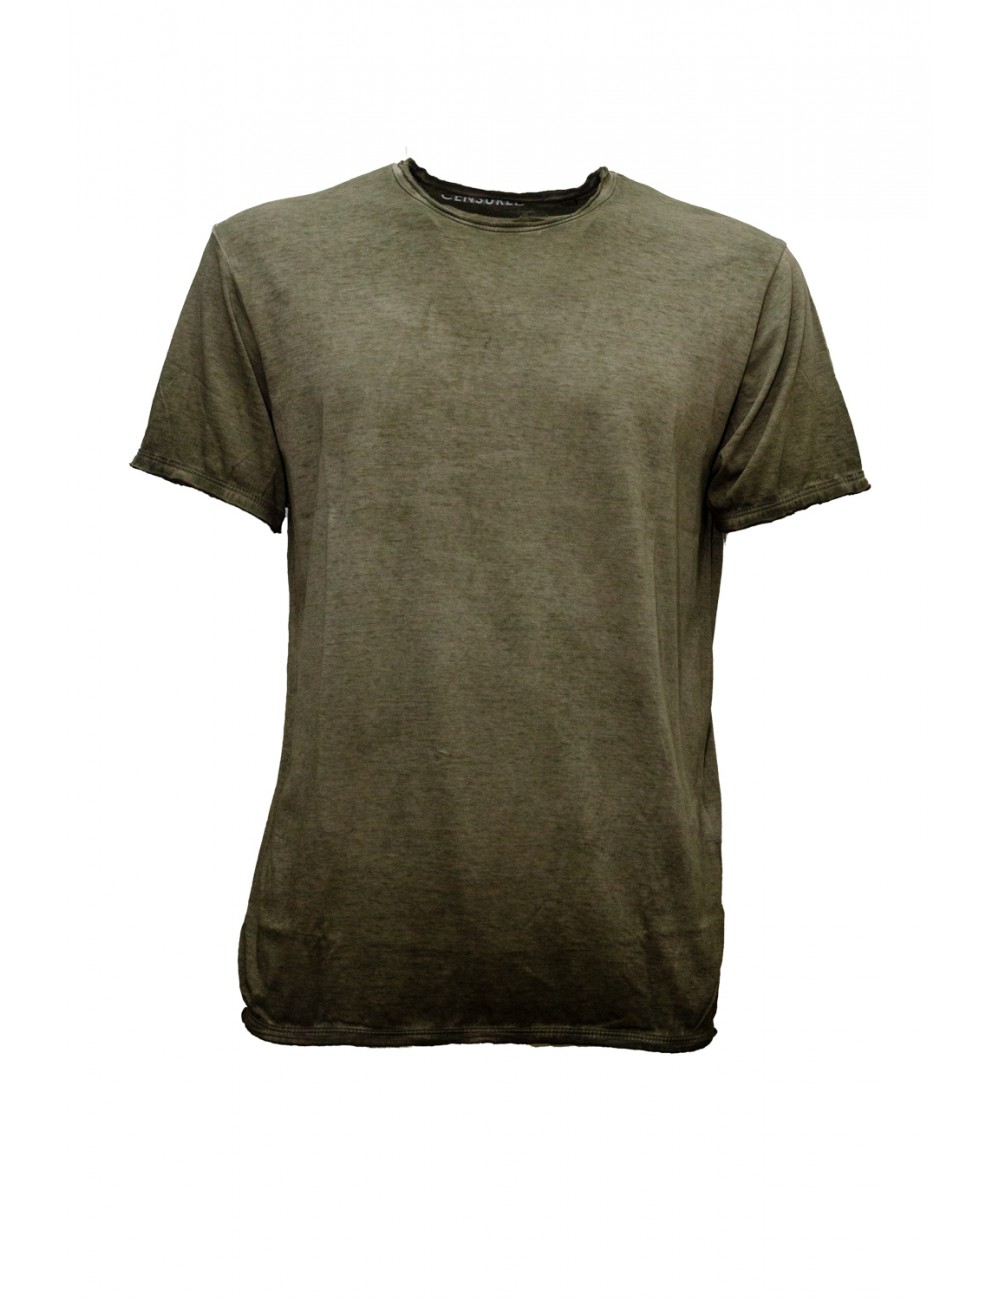 t-shirt censured UOMO VERDE MILITARE - TM 2400 T JSEP 395F vista frontale